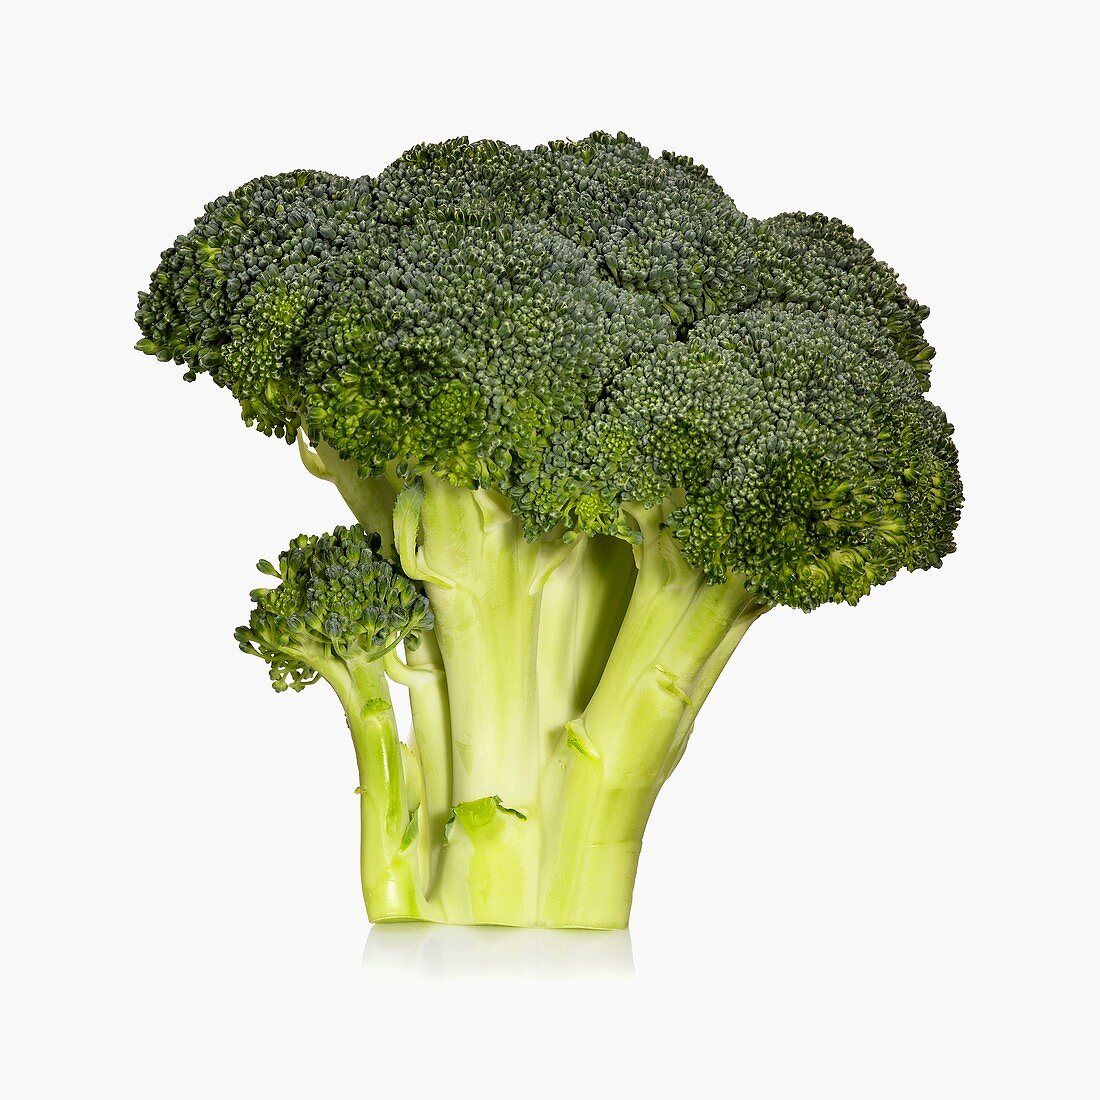 Raw Broccoli Bunch on White Background